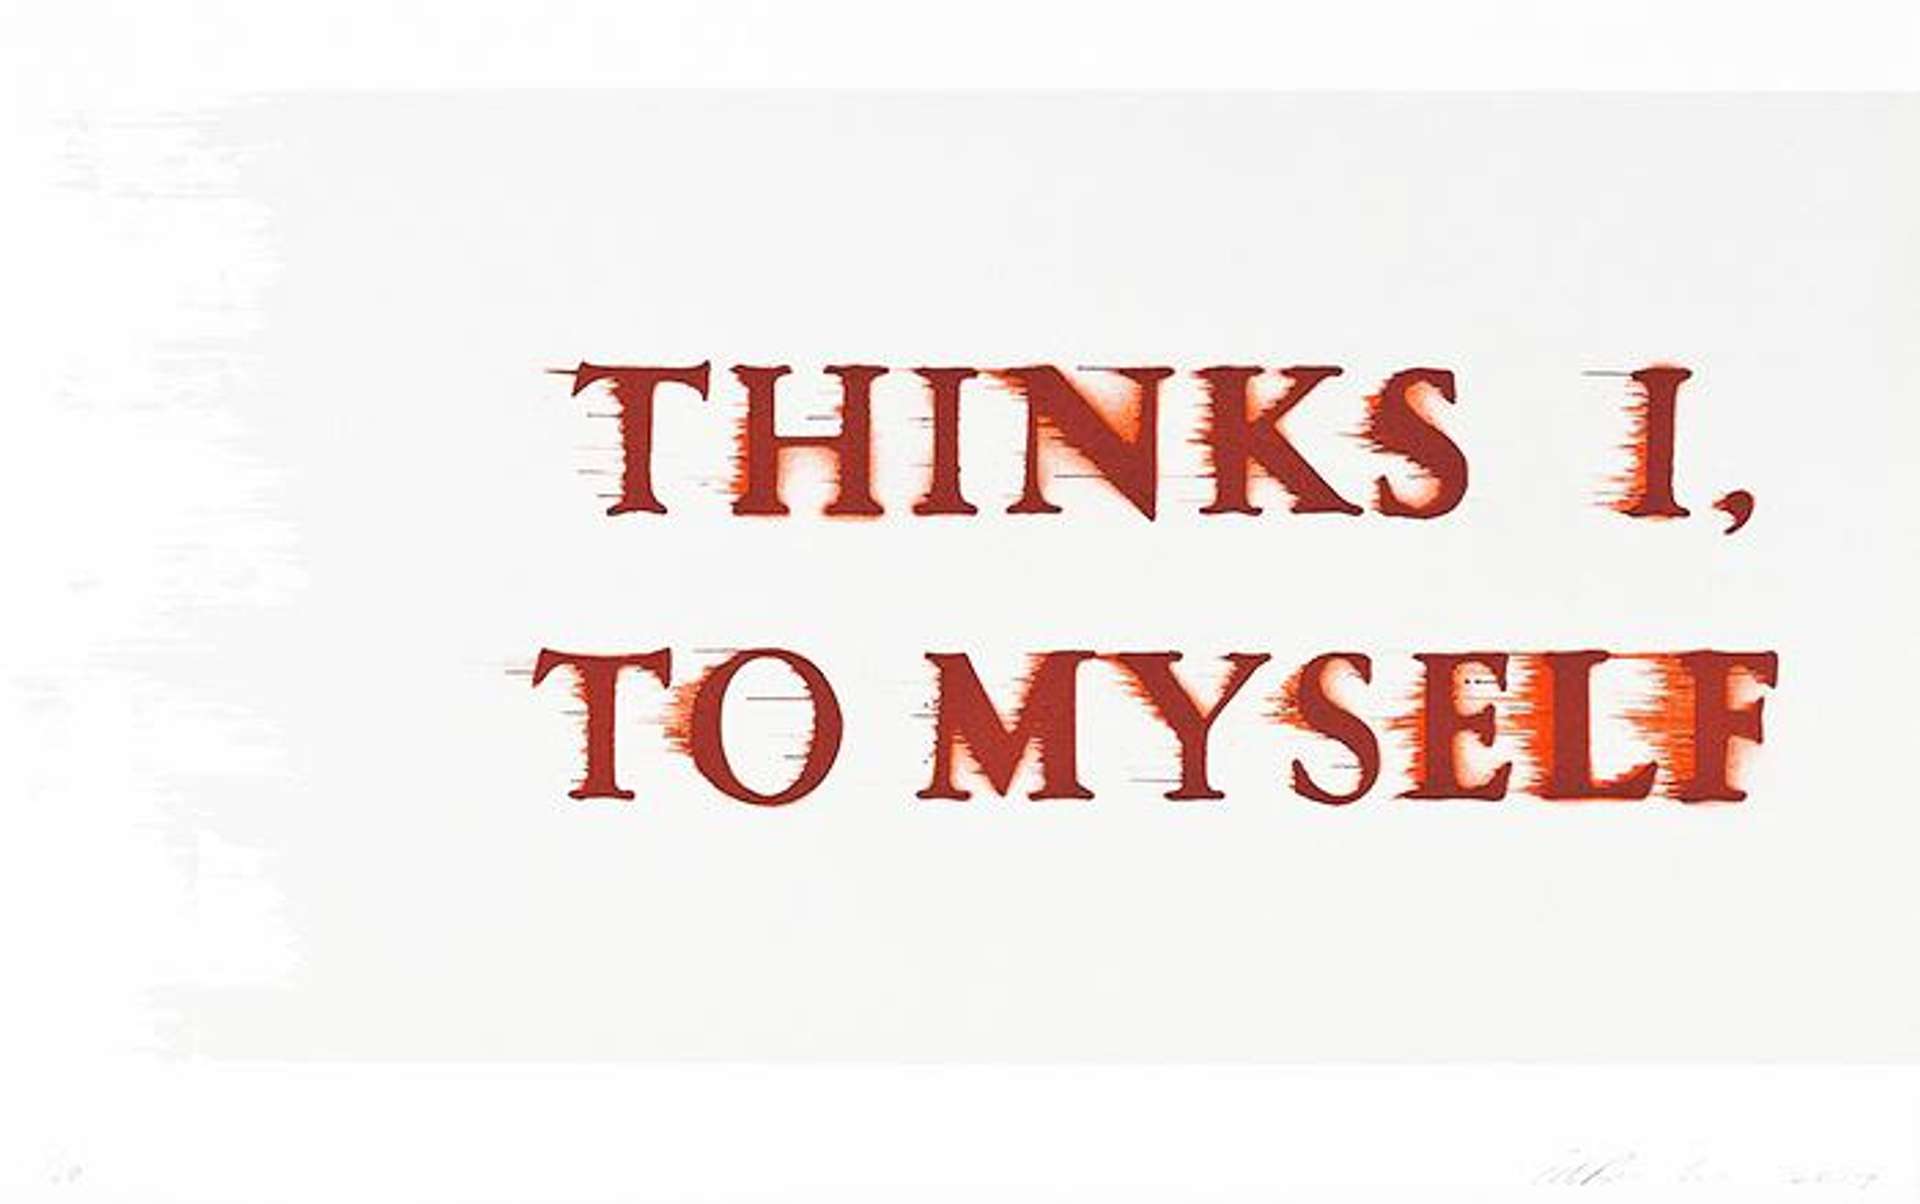 Thinks I, To Myself - Signed Print by Ed Ruscha 2017 - MyArtBroker